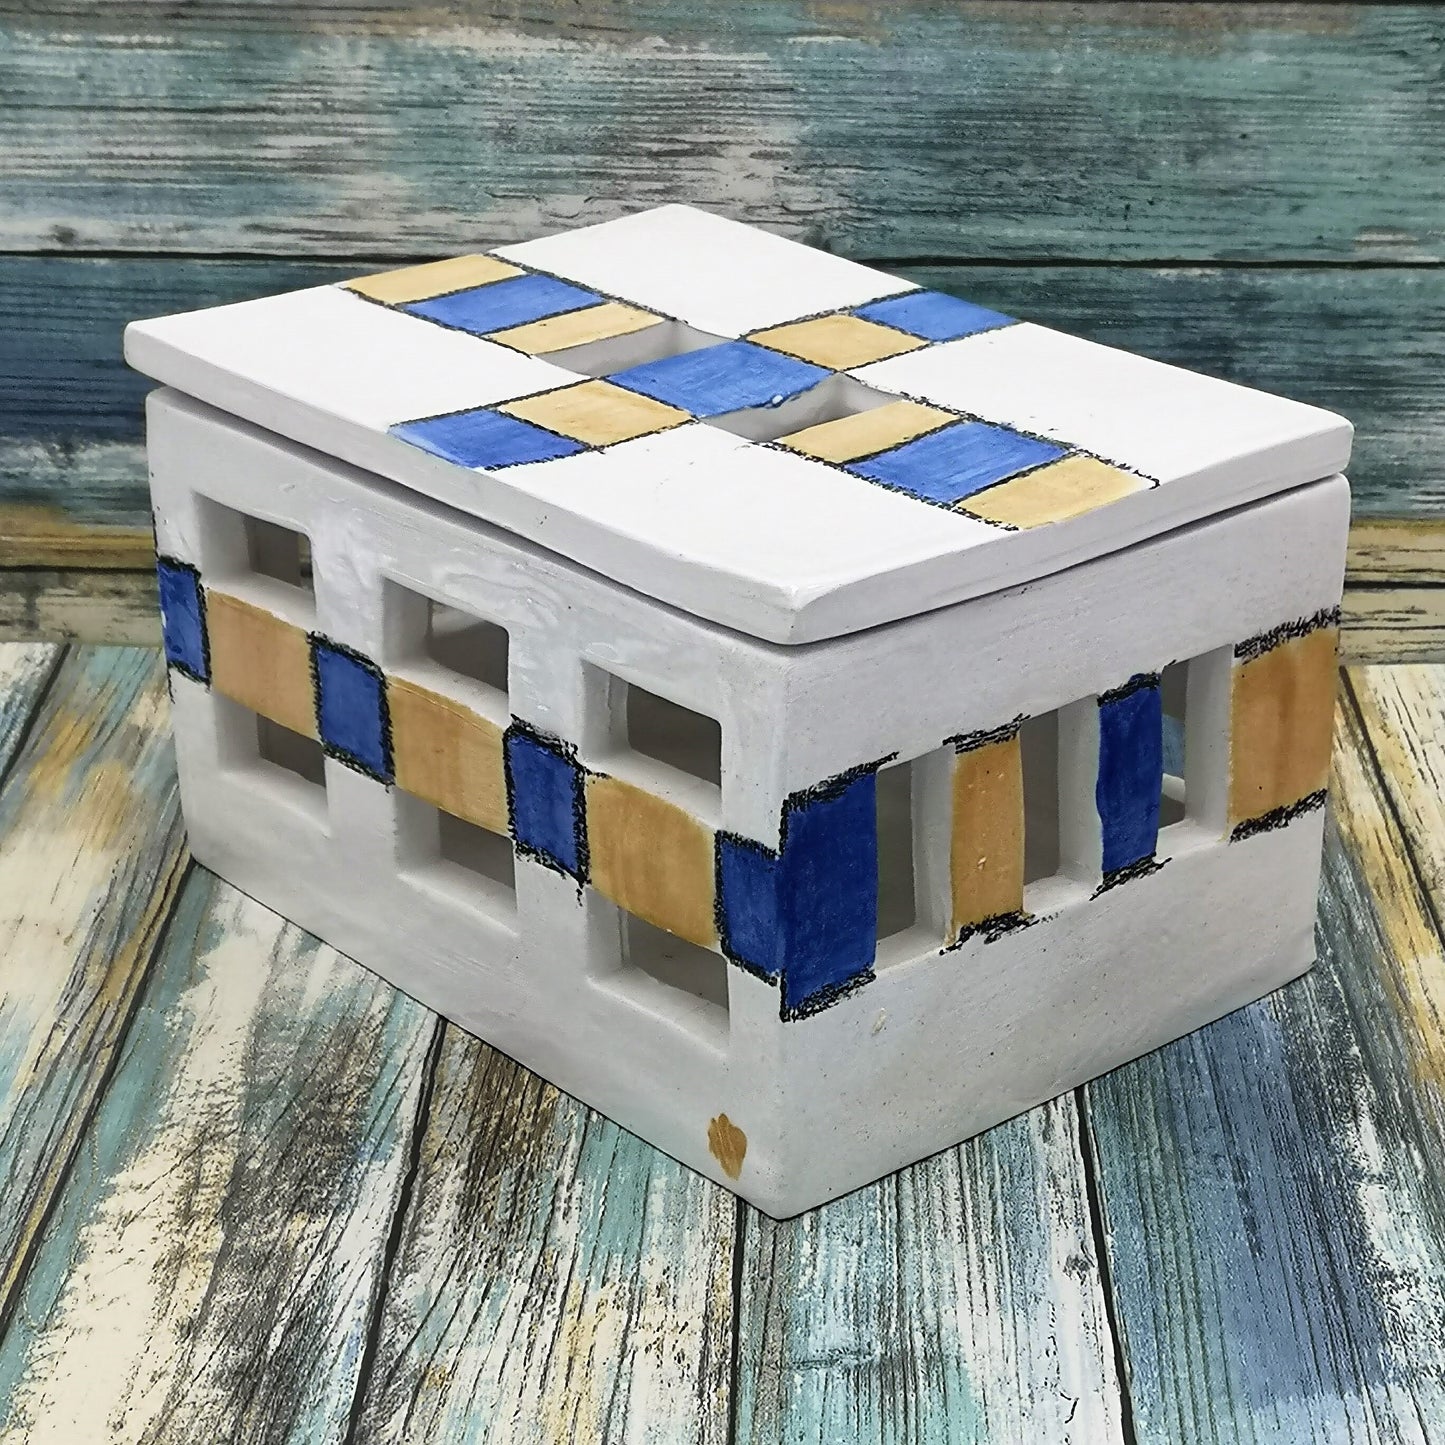 UNIQUE JEWELRY BOX, Hand Painted Large Jewelry Box With Lid, Decorative Ceramic Minimalist Box, Modern Treasure Box - Ceramica Ana Rafael